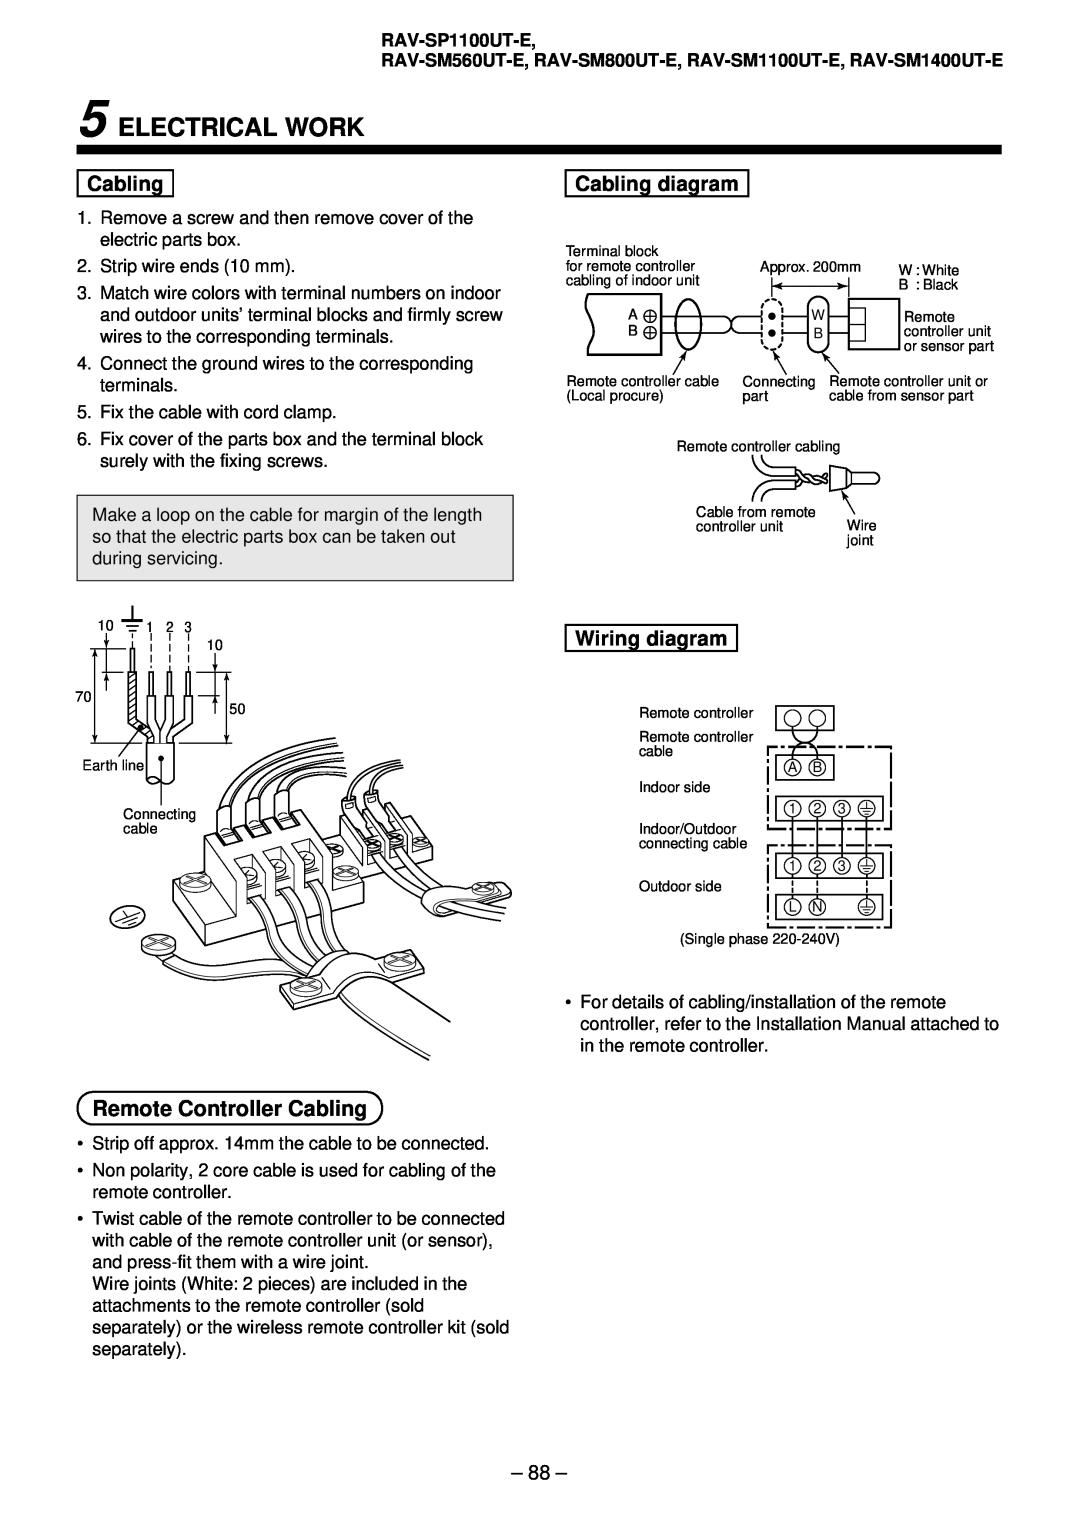 Toshiba RAV-SM1101AT-E, RAV-SM1401AT-E Remote Controller Cabling, Cabling diagram, Wiring diagram, RAV-SP1100UT-E 